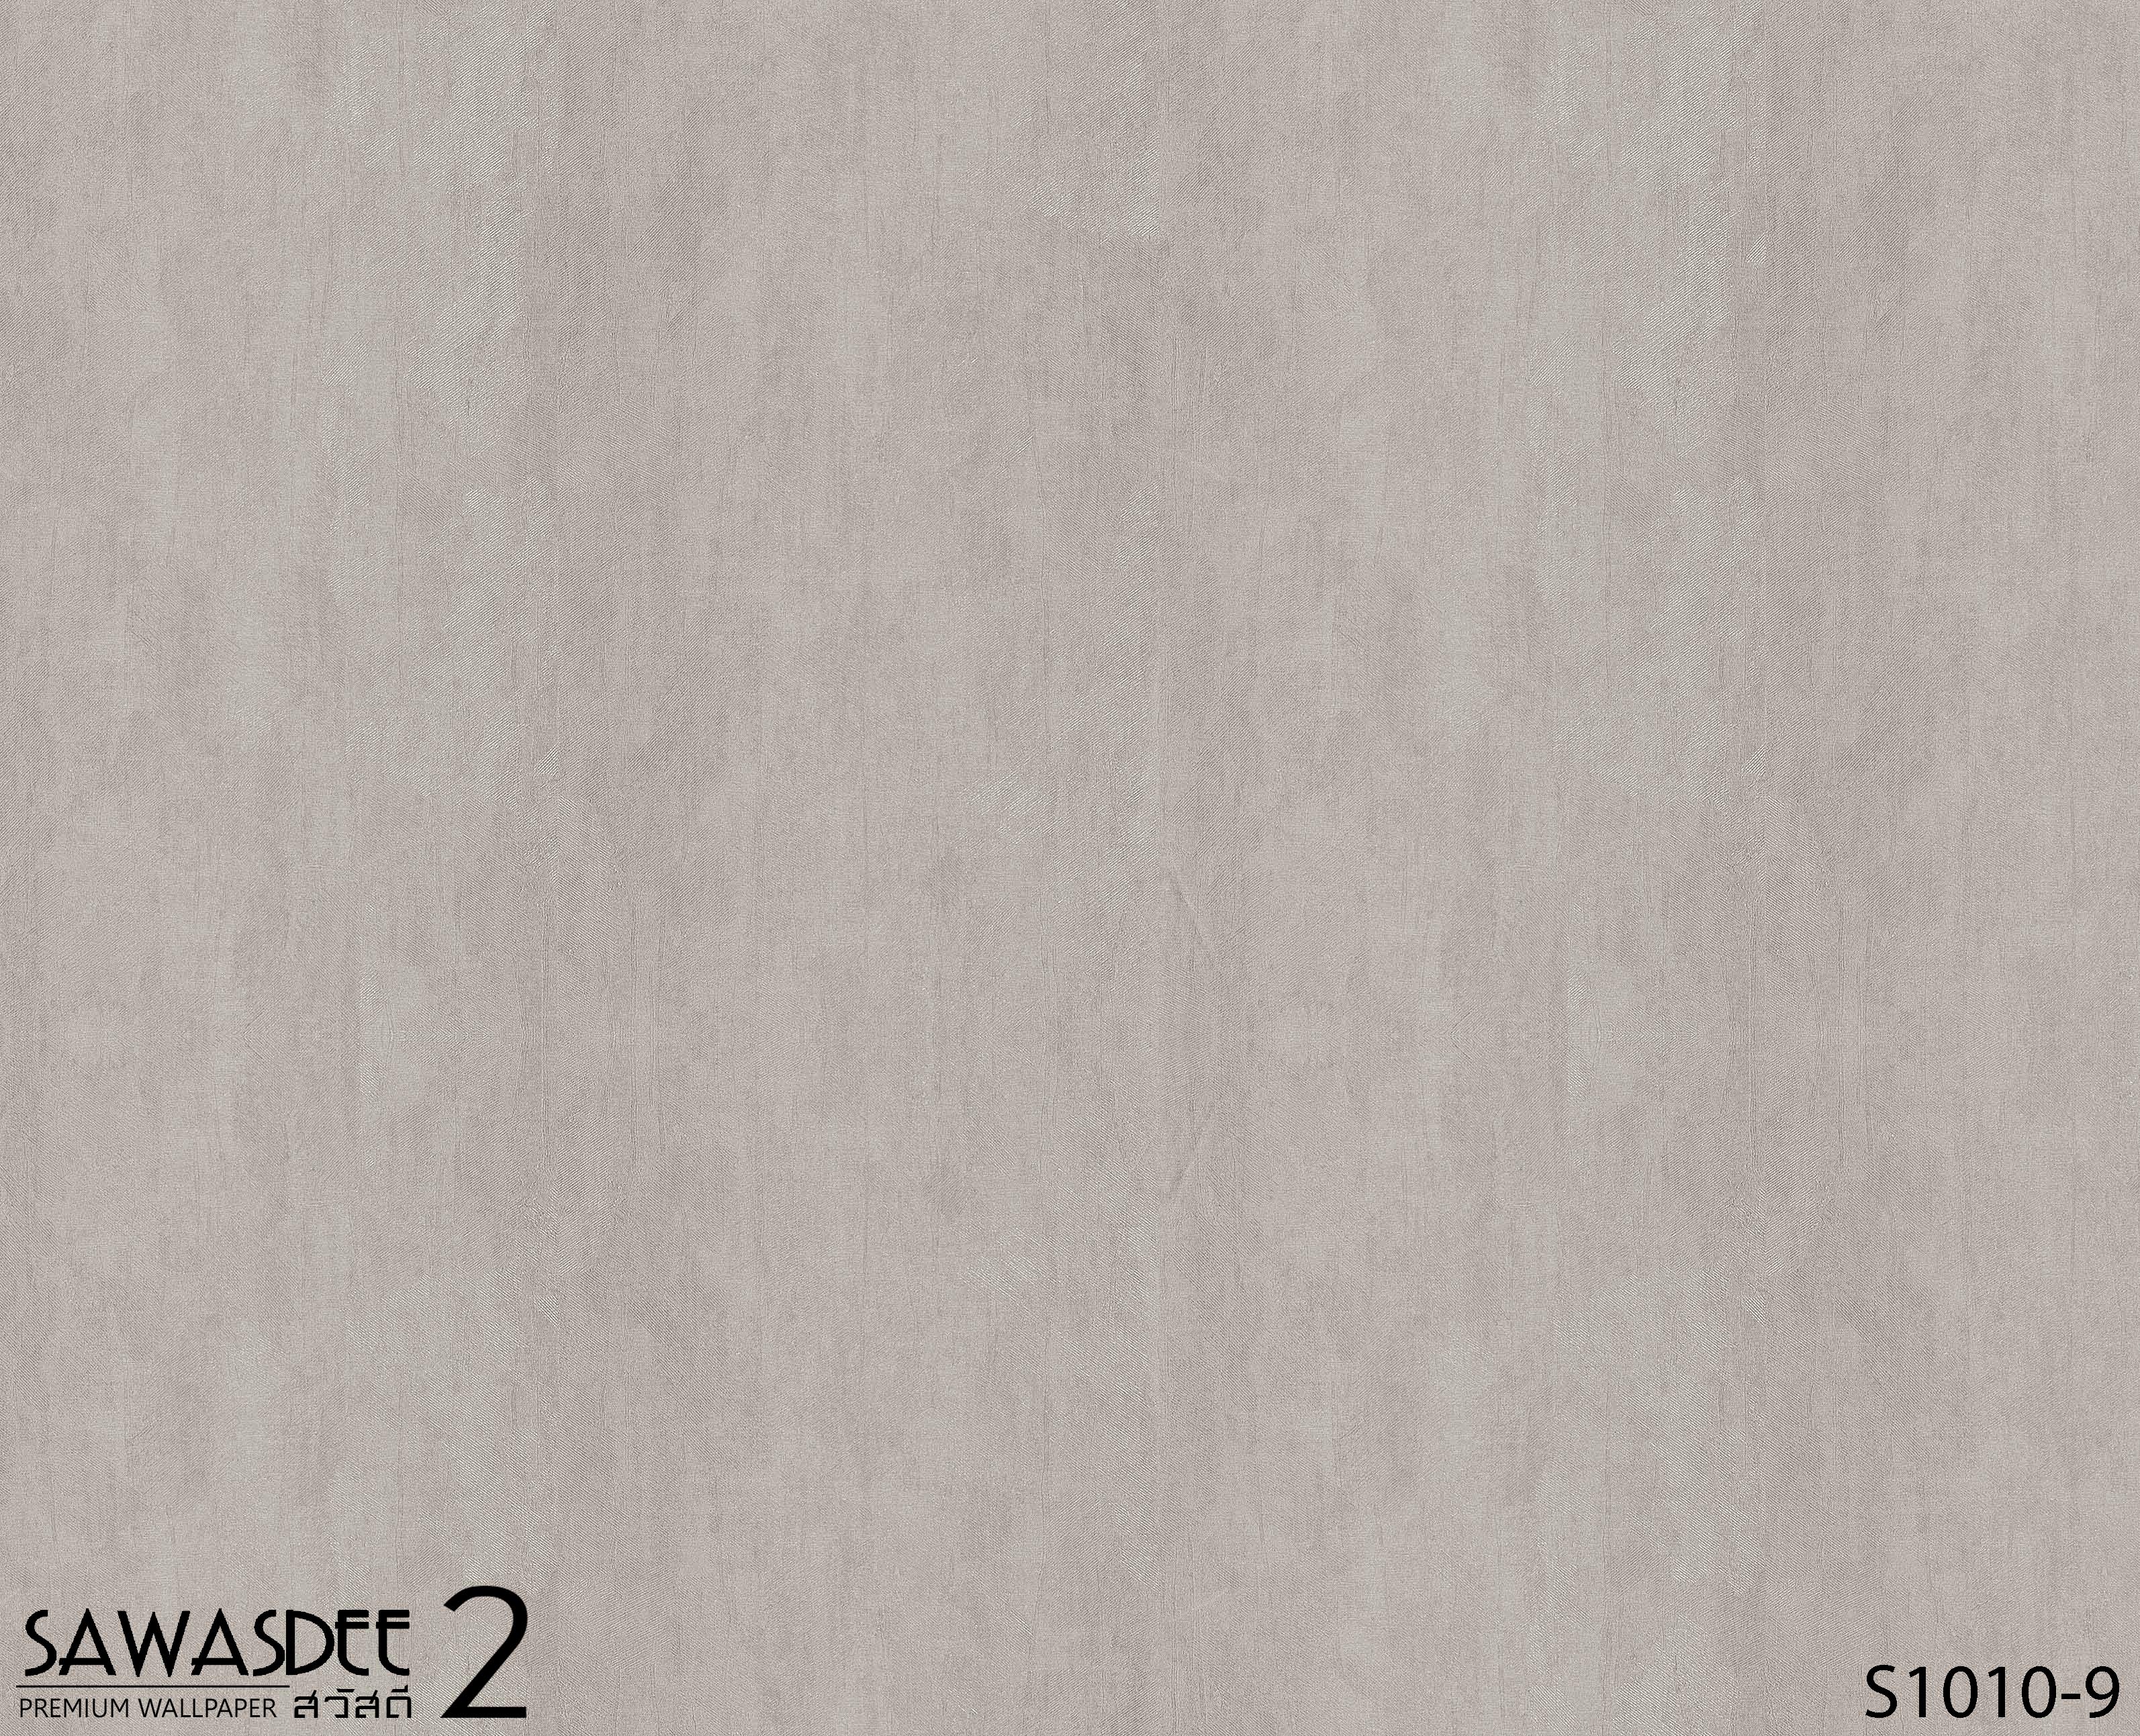 Wallpaper (SAWASDEE 2) S1010-9